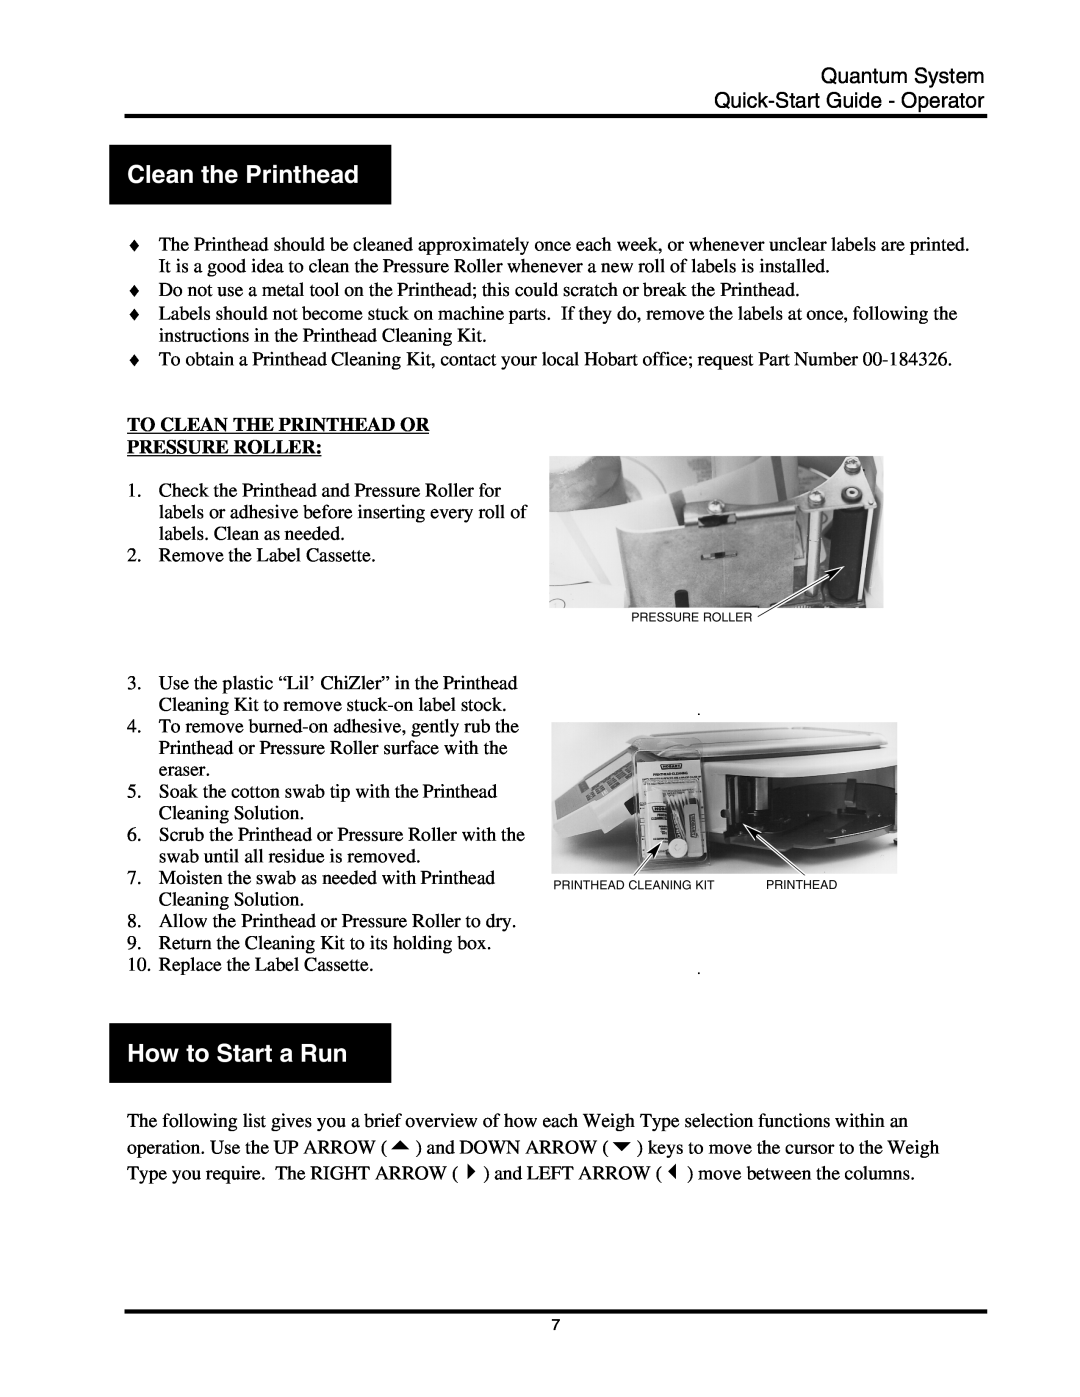 Hobart ML-29206, ML-29222, ML-29207 Clean the Printhead, How to Start a Run, To Clean The Printhead Or Pressure Roller 